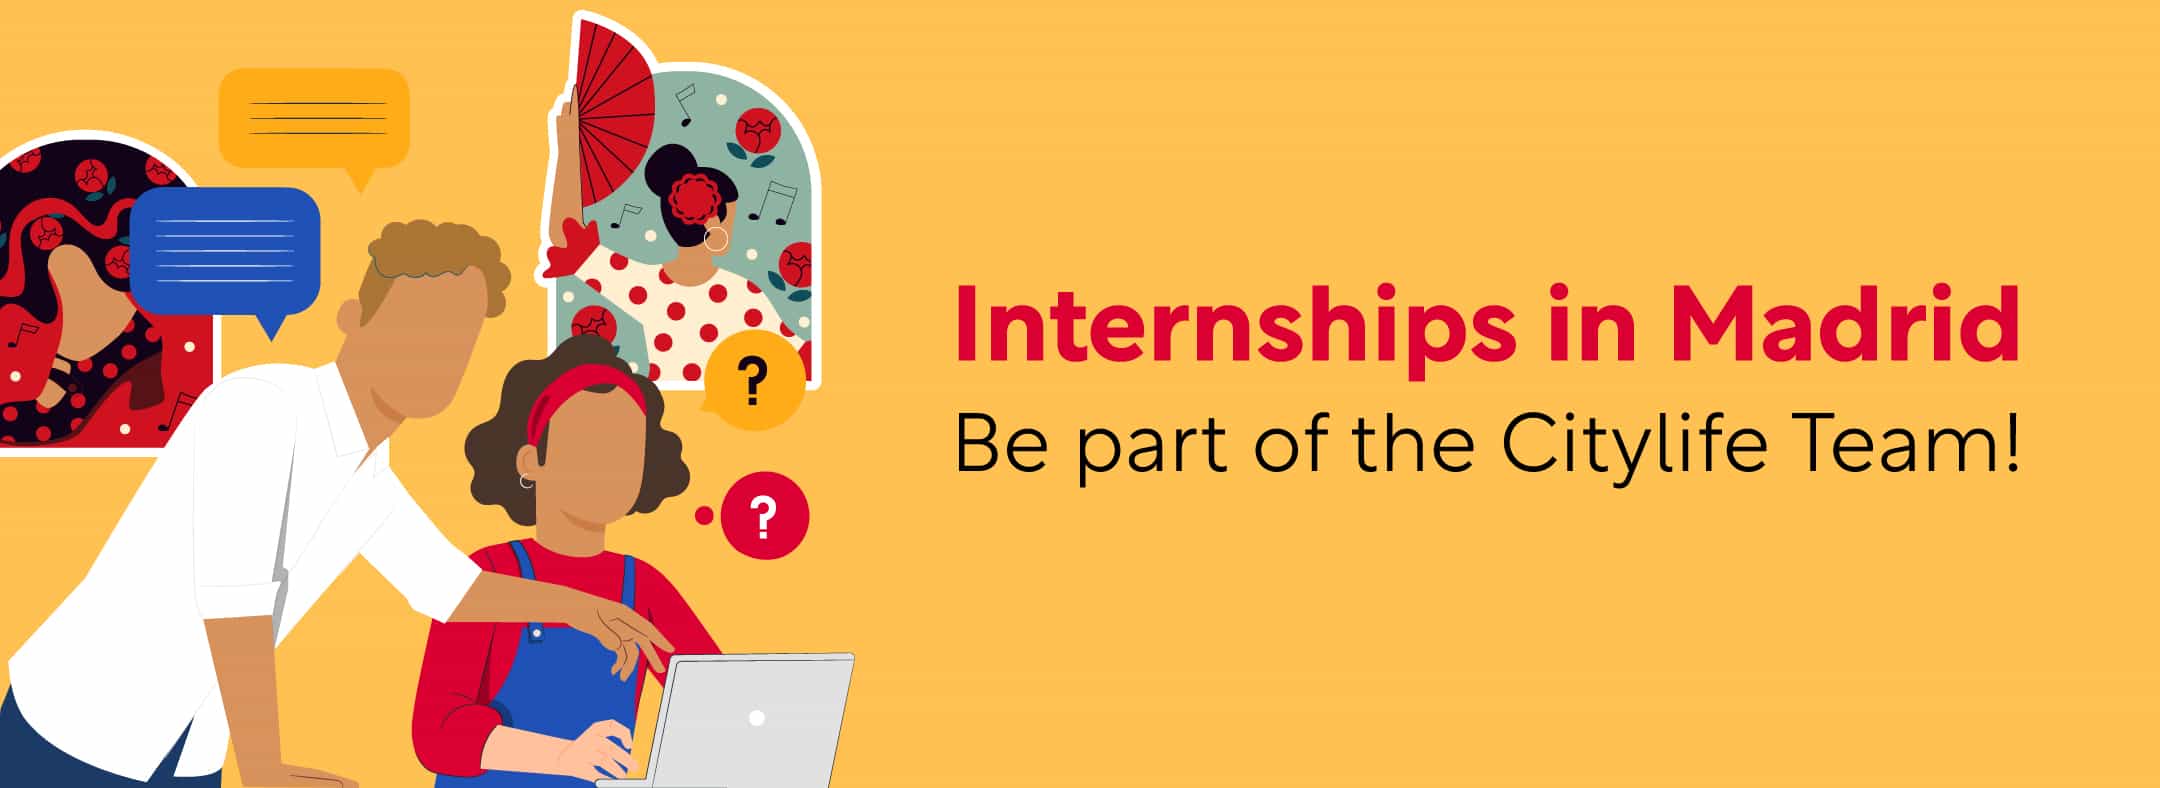 citylife-internships-in-madrid-web-banner